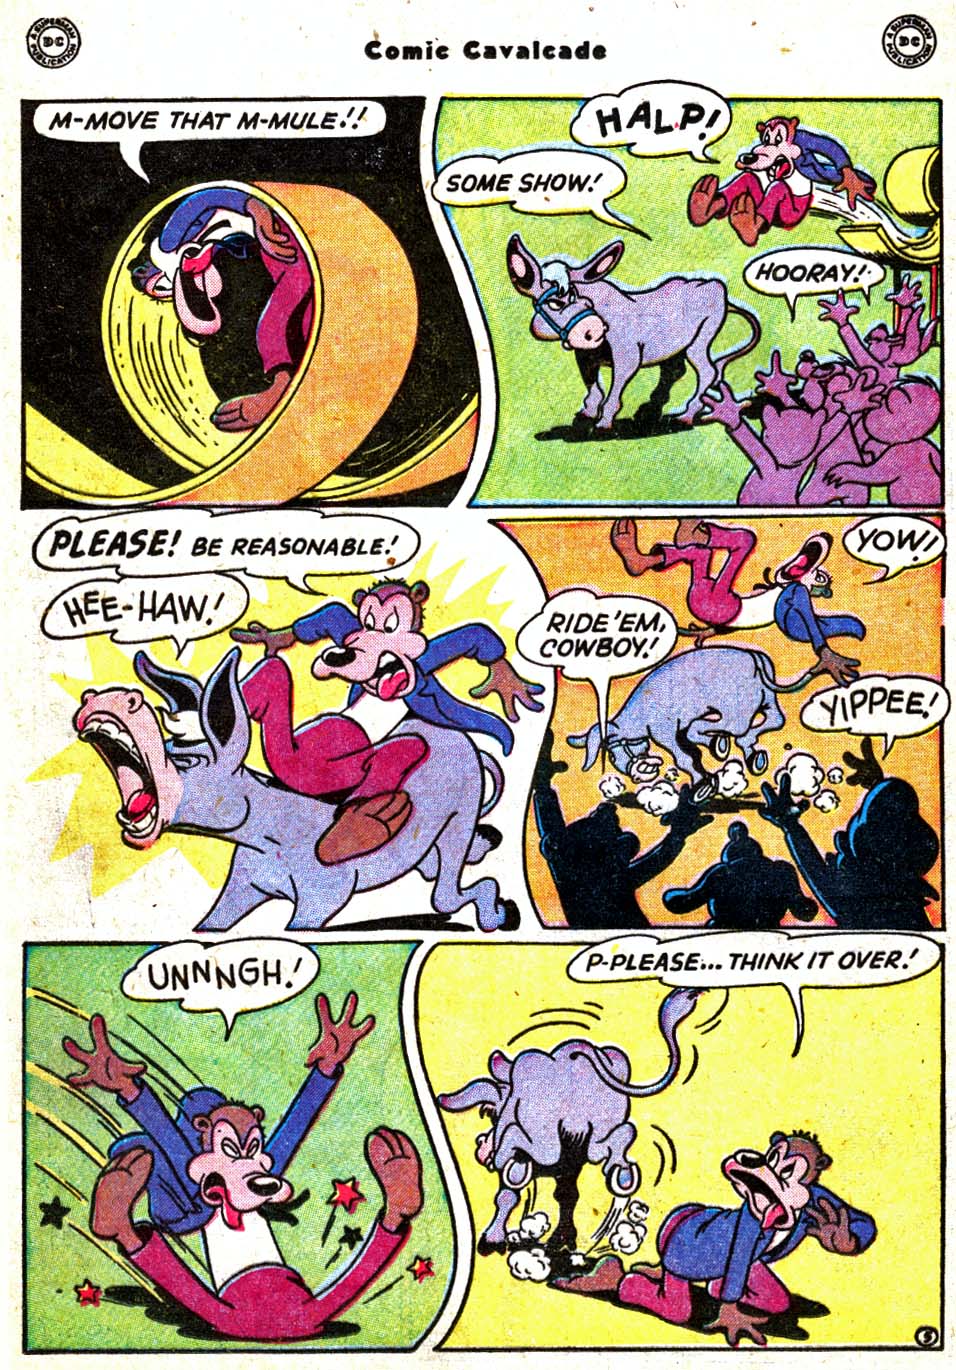 Comic Cavalcade issue 31 - Page 22